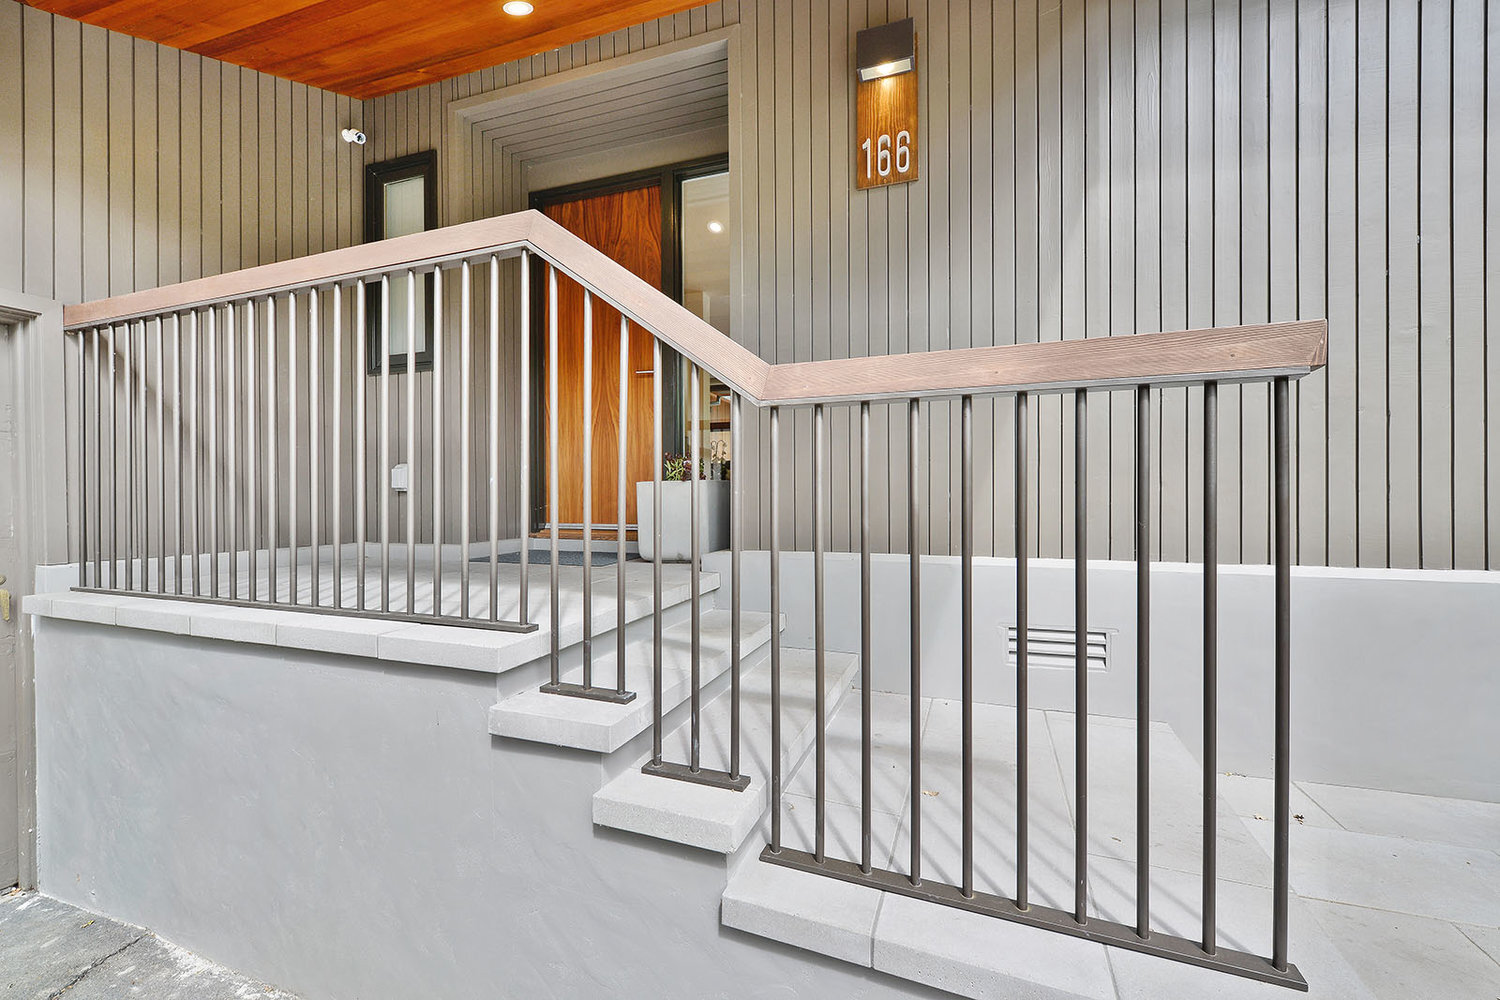 Portola Valley stair design